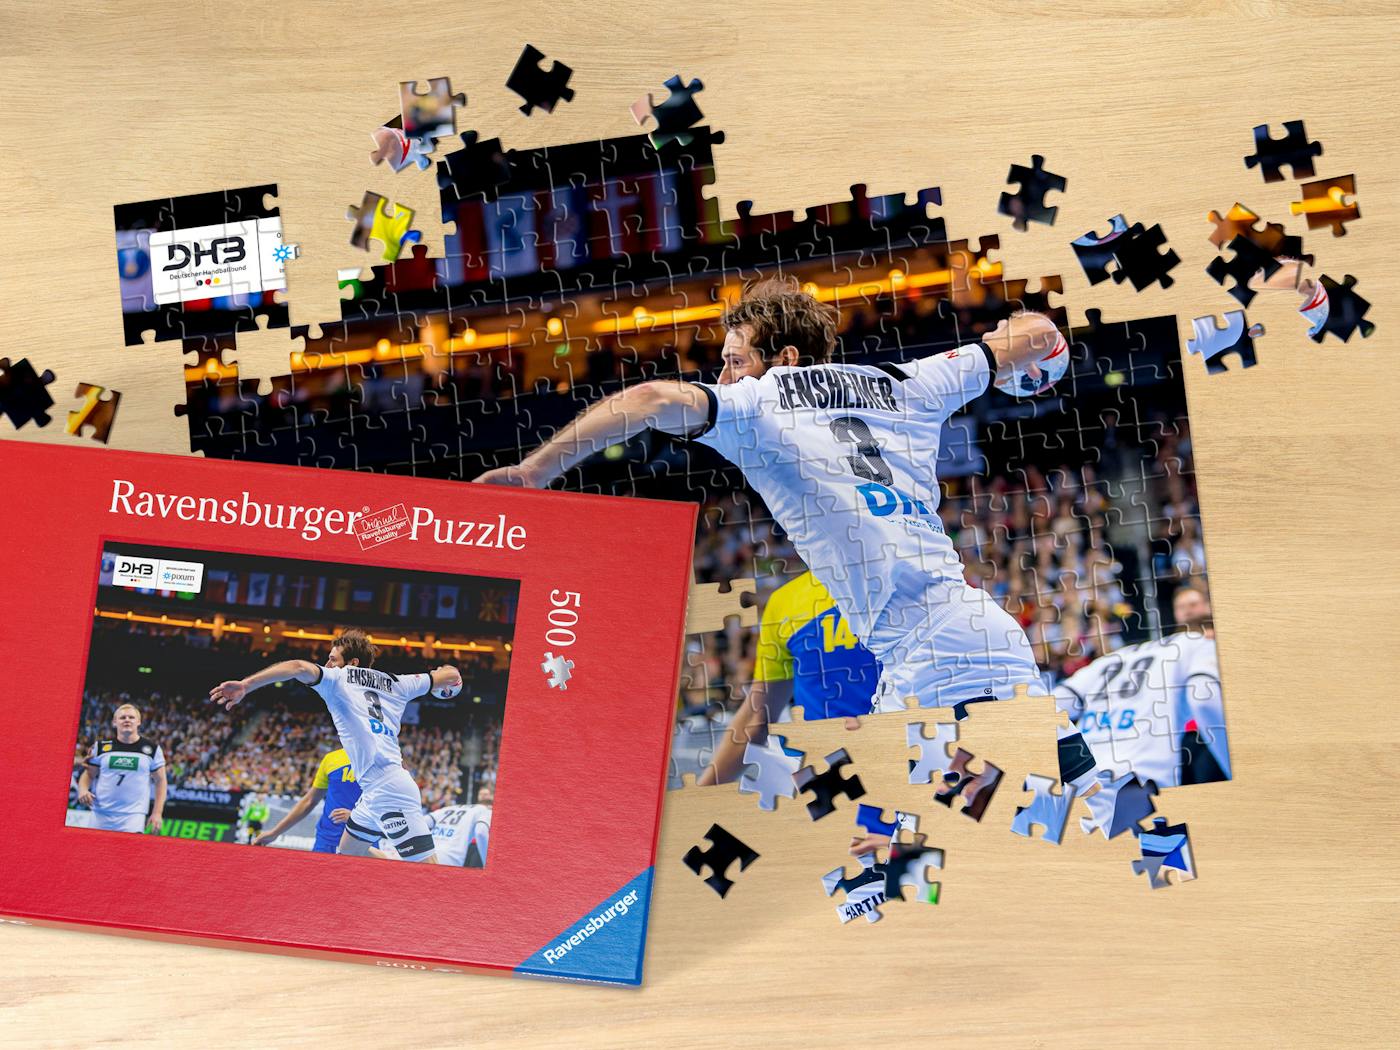 Gestalte dein eigenes Handball-Puzzle